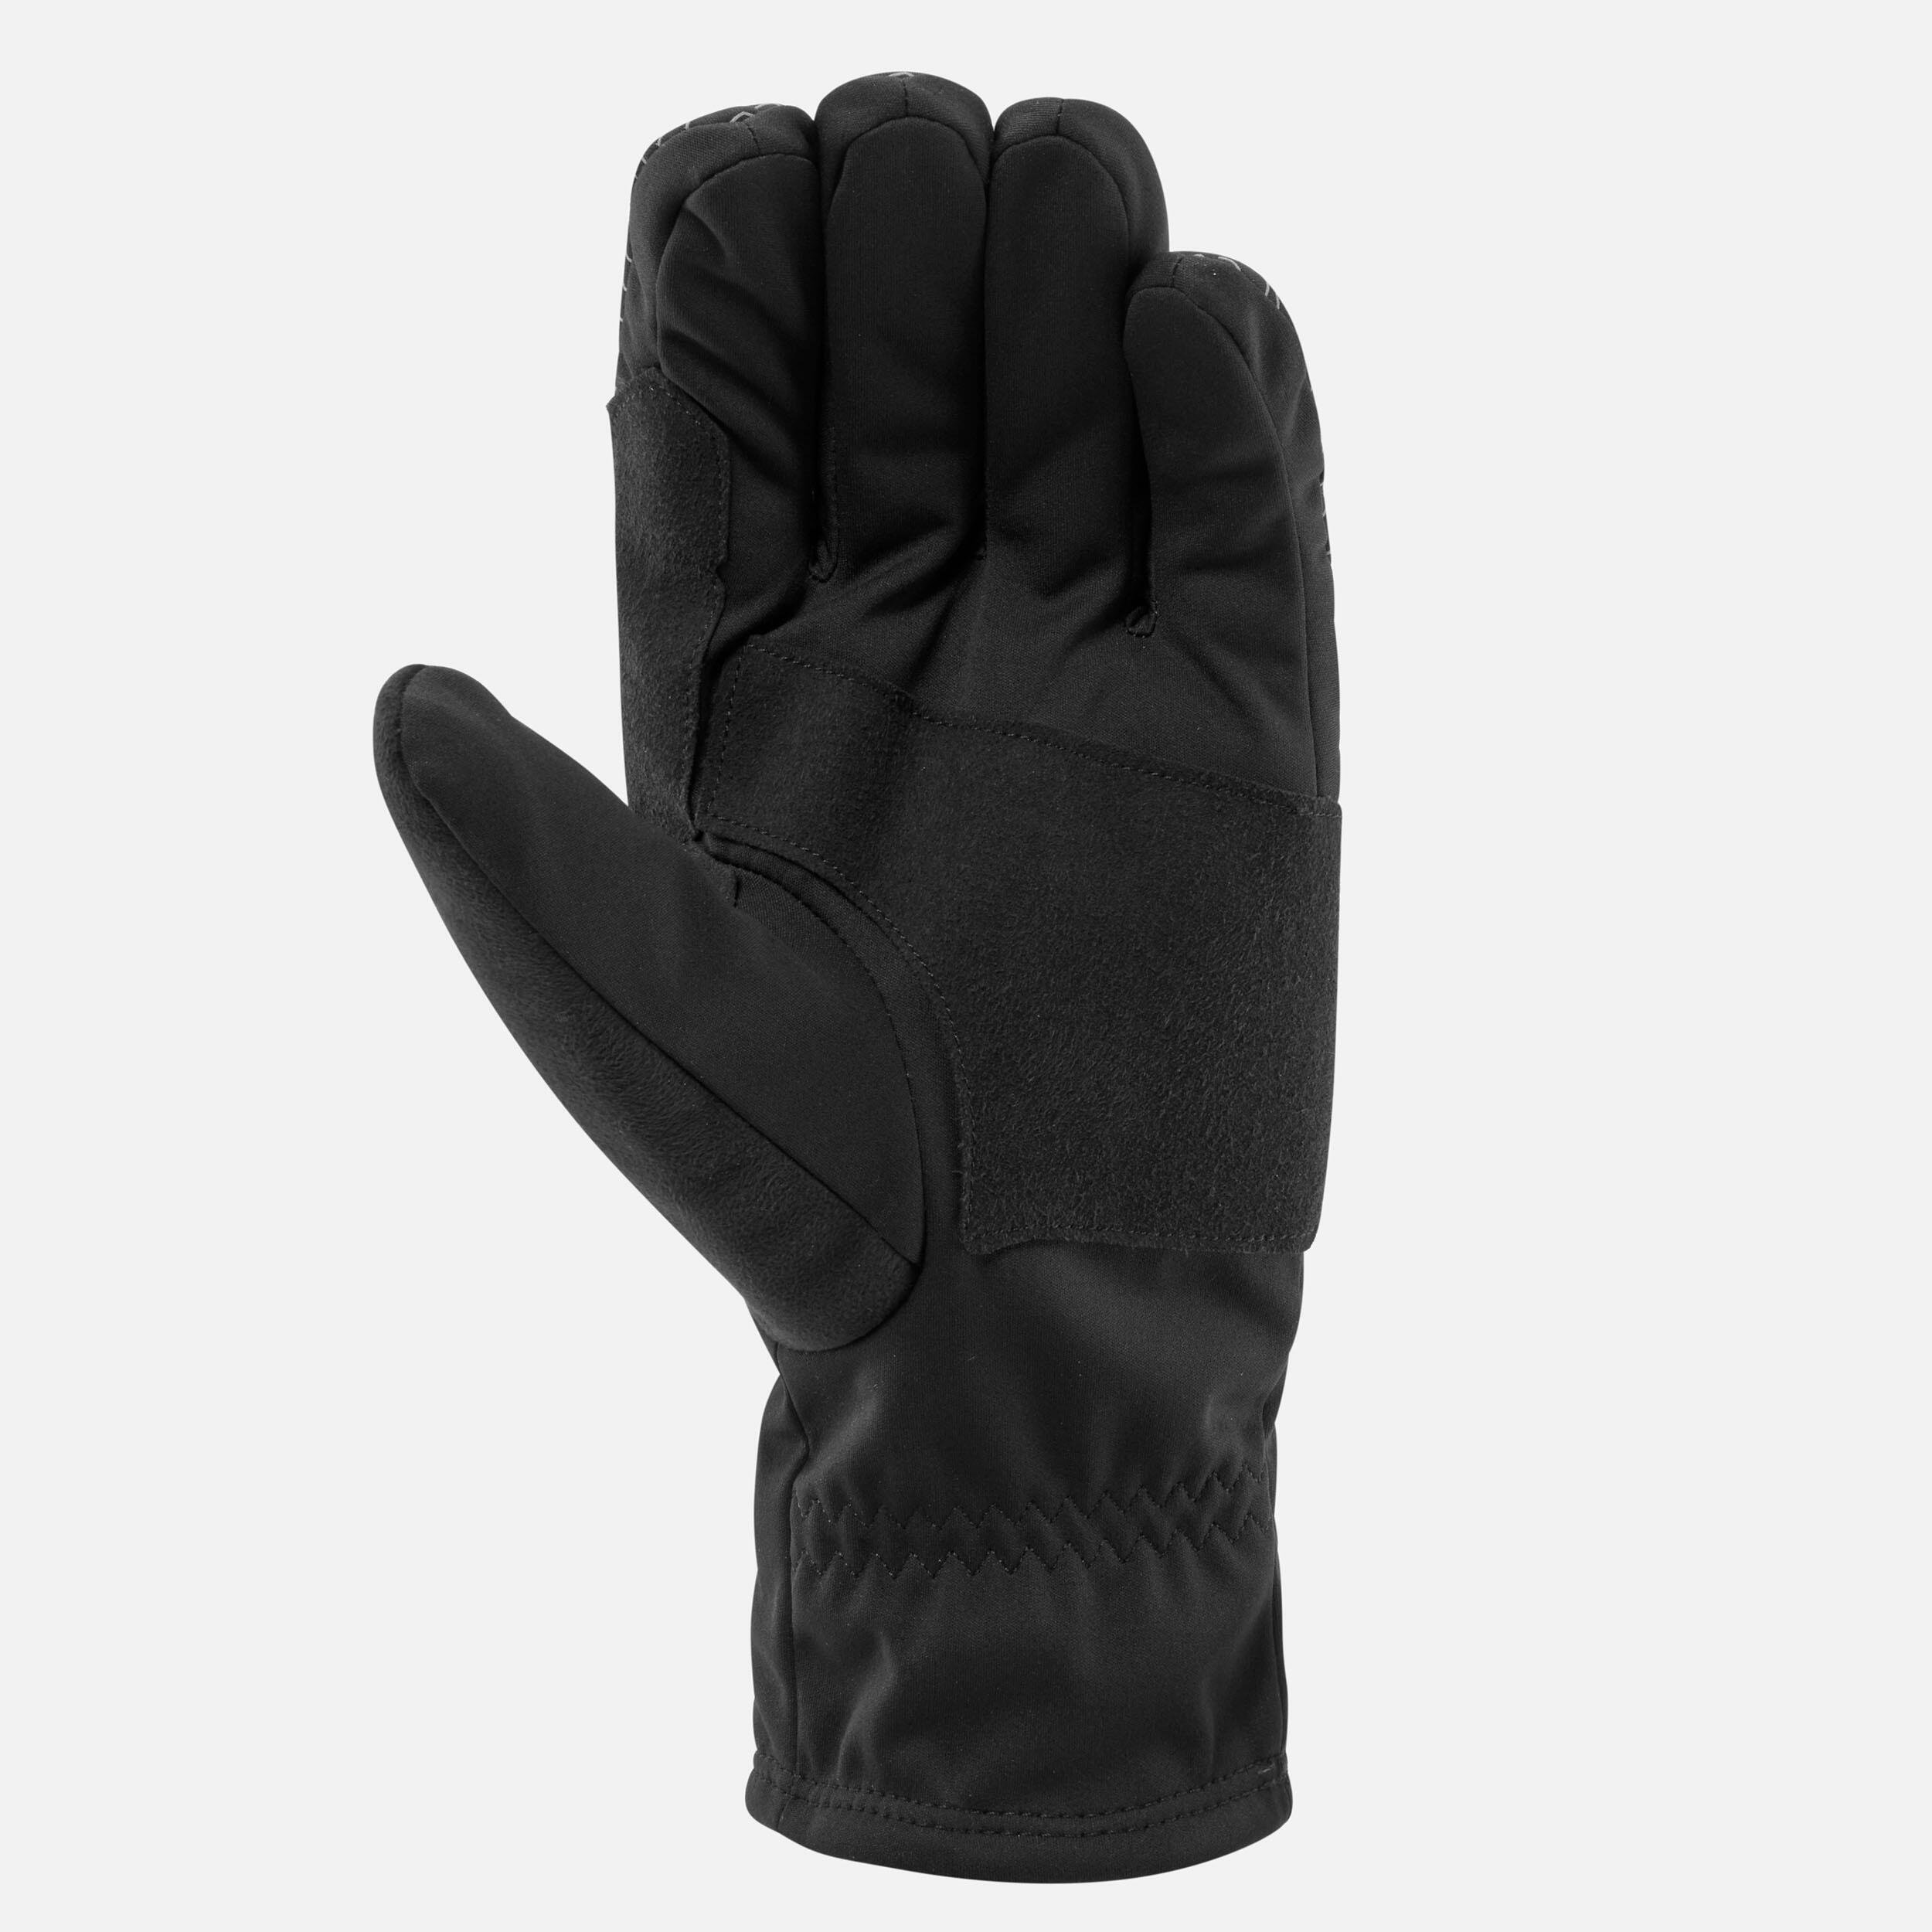 Adult Warm Cross-Country Ski Gloves - XC S GLOVES 100 - Black 5/8